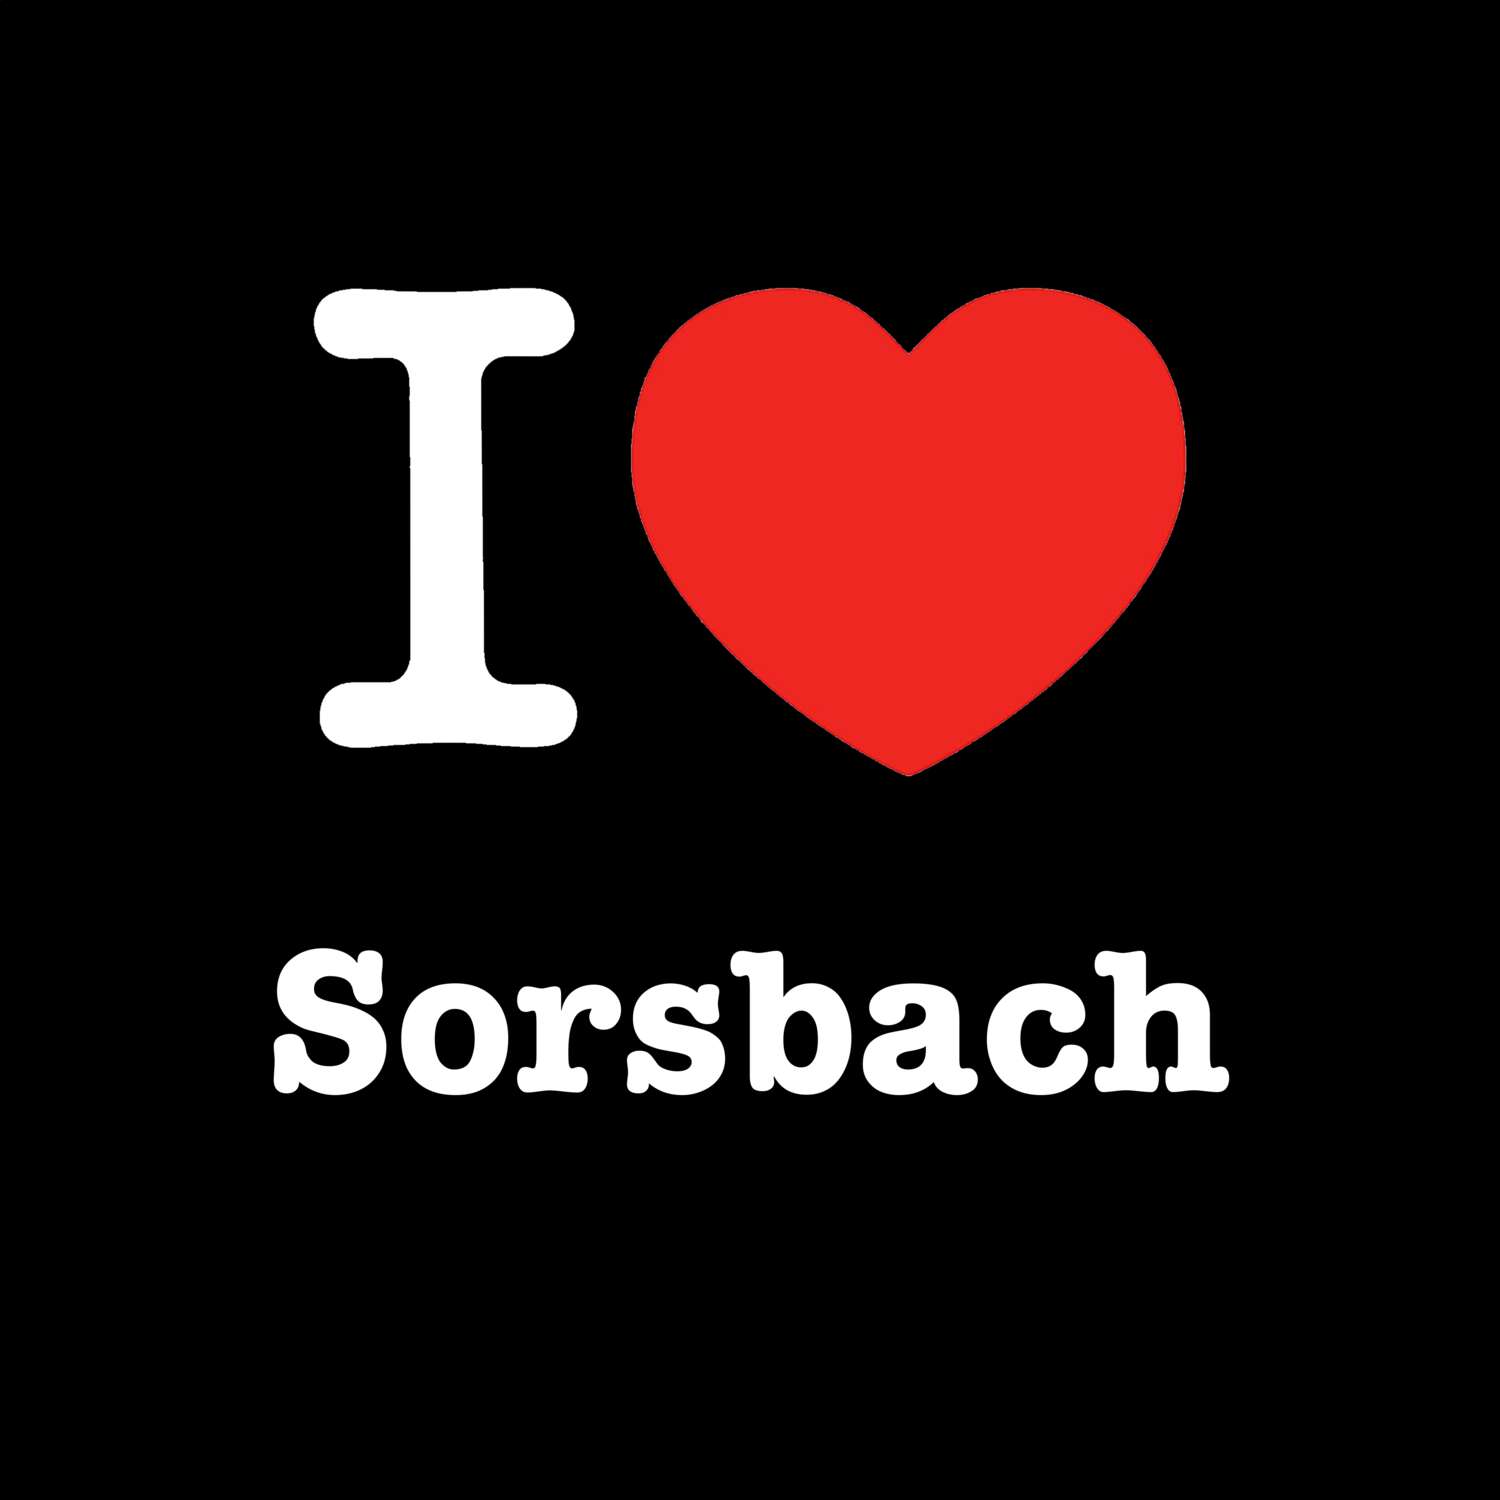 Sorsbach T-Shirt »I love«